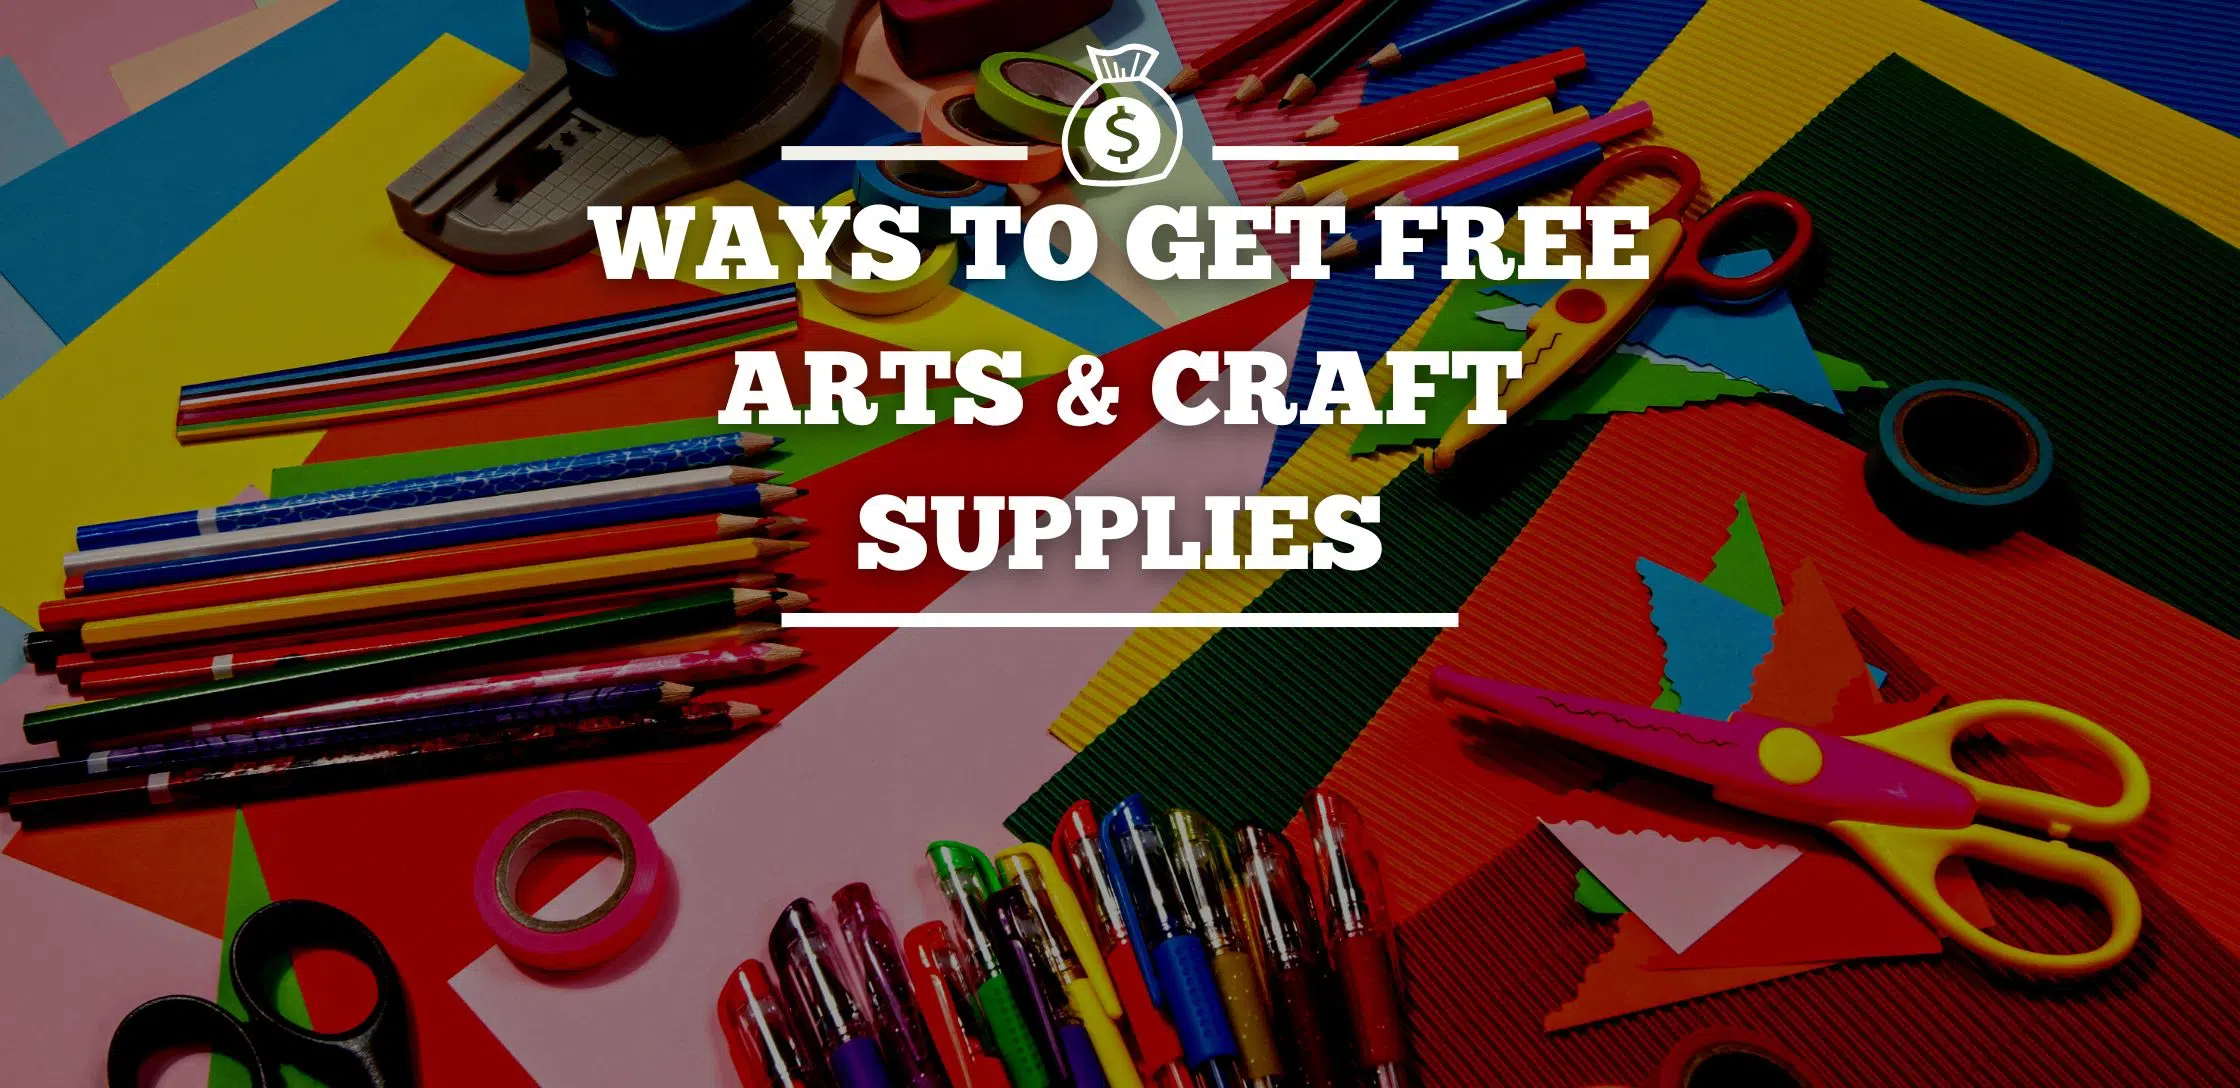 Craft supplies freebies